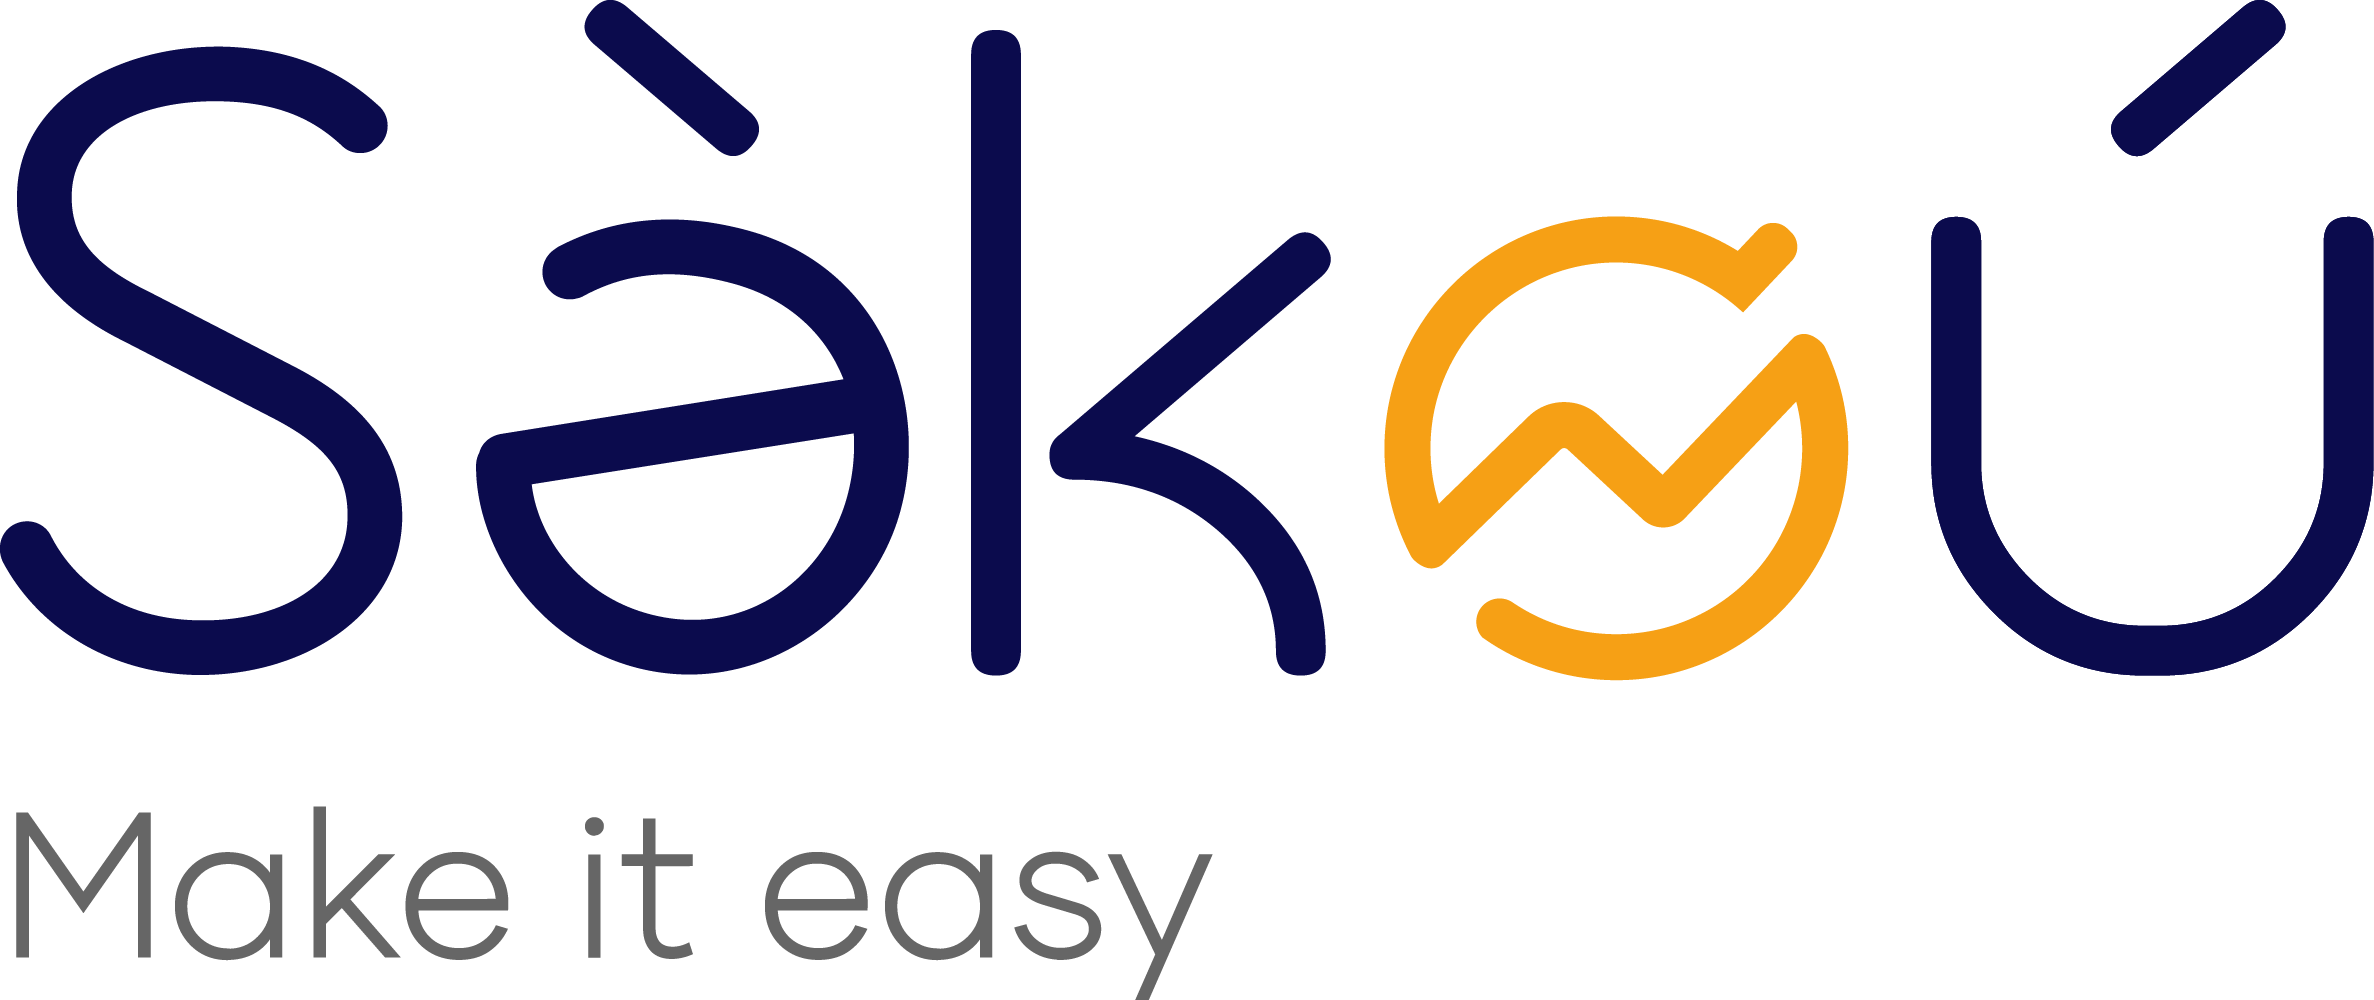 SEKOU-logo